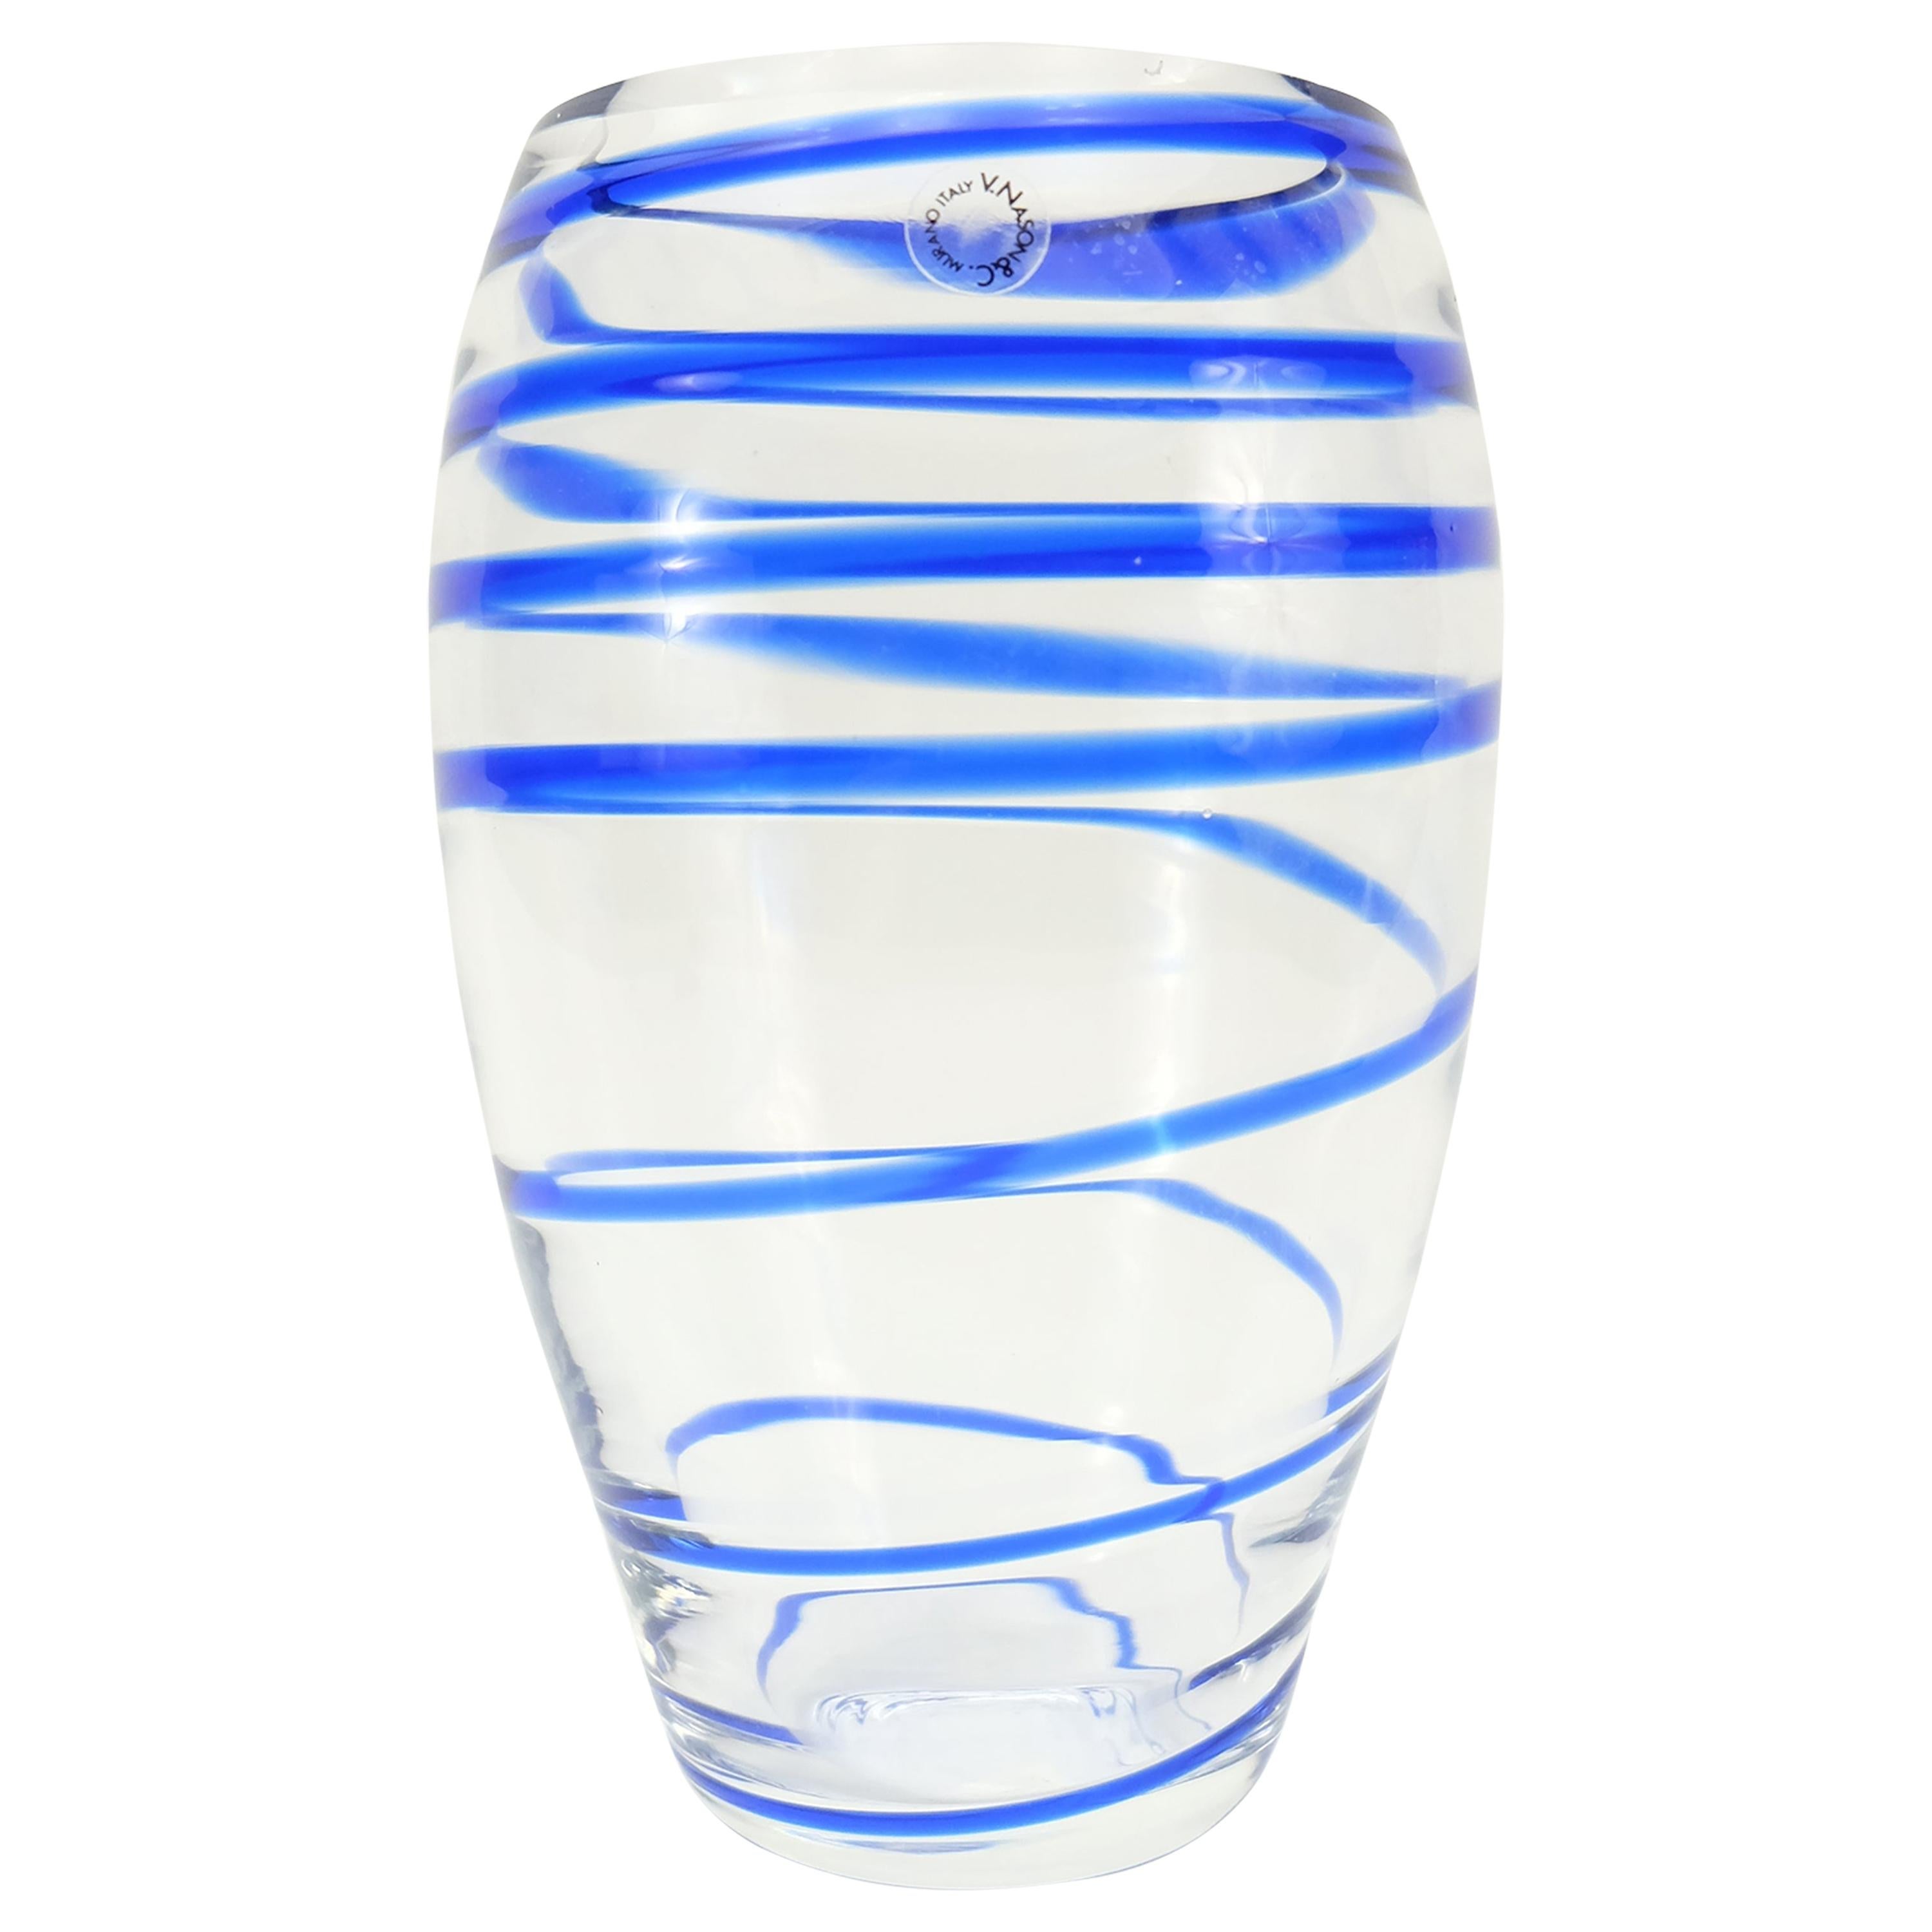 V. Nason & C. Italian Murano Glass Vase with Blue Spiral Stripe